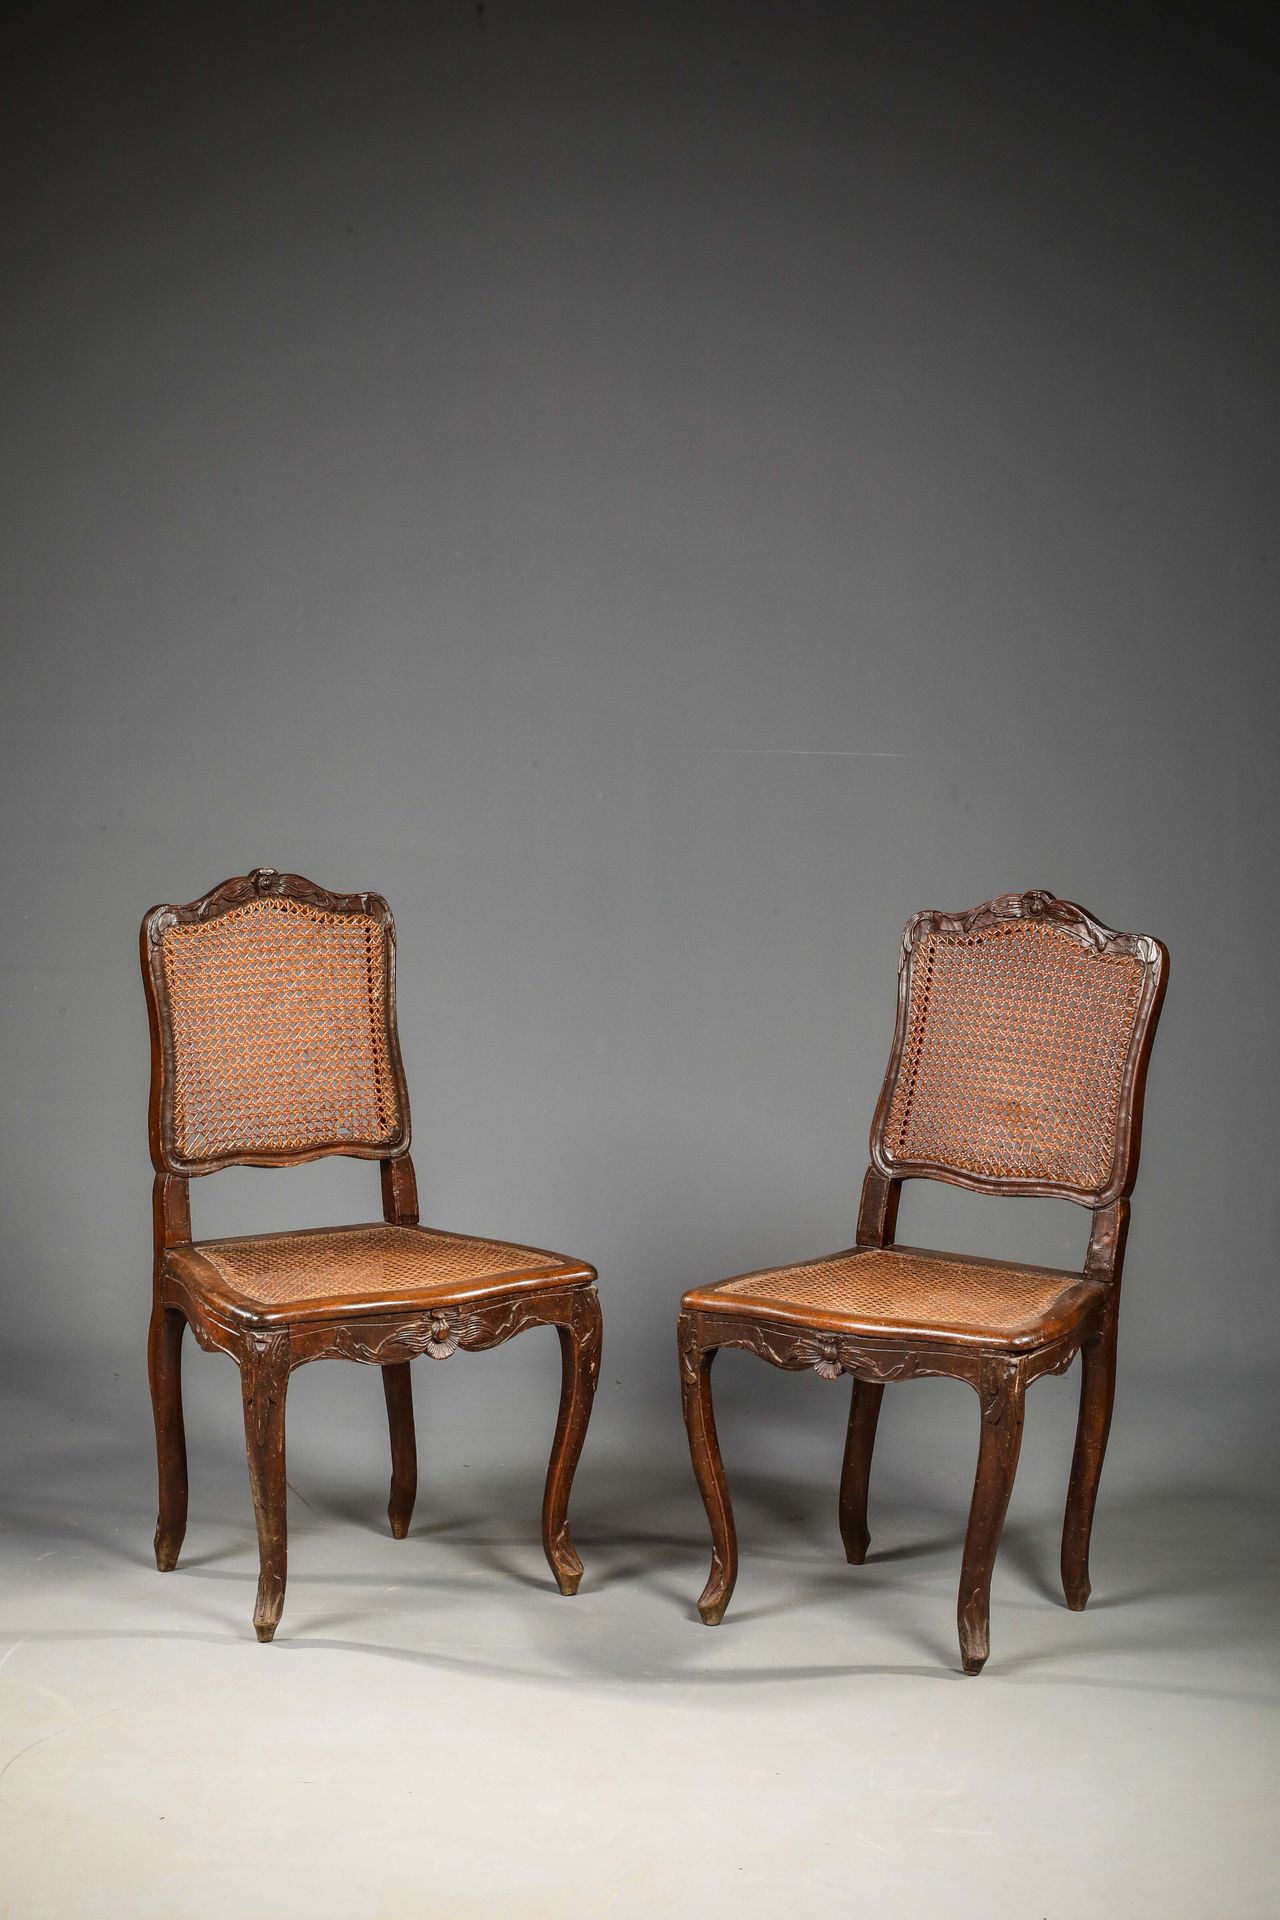 Null 天然木制模制和雕刻的一对椅子，带藤条底座_x000D_
18世纪末的省级作品_x000D__x000D_
95 x 50 x 45厘米